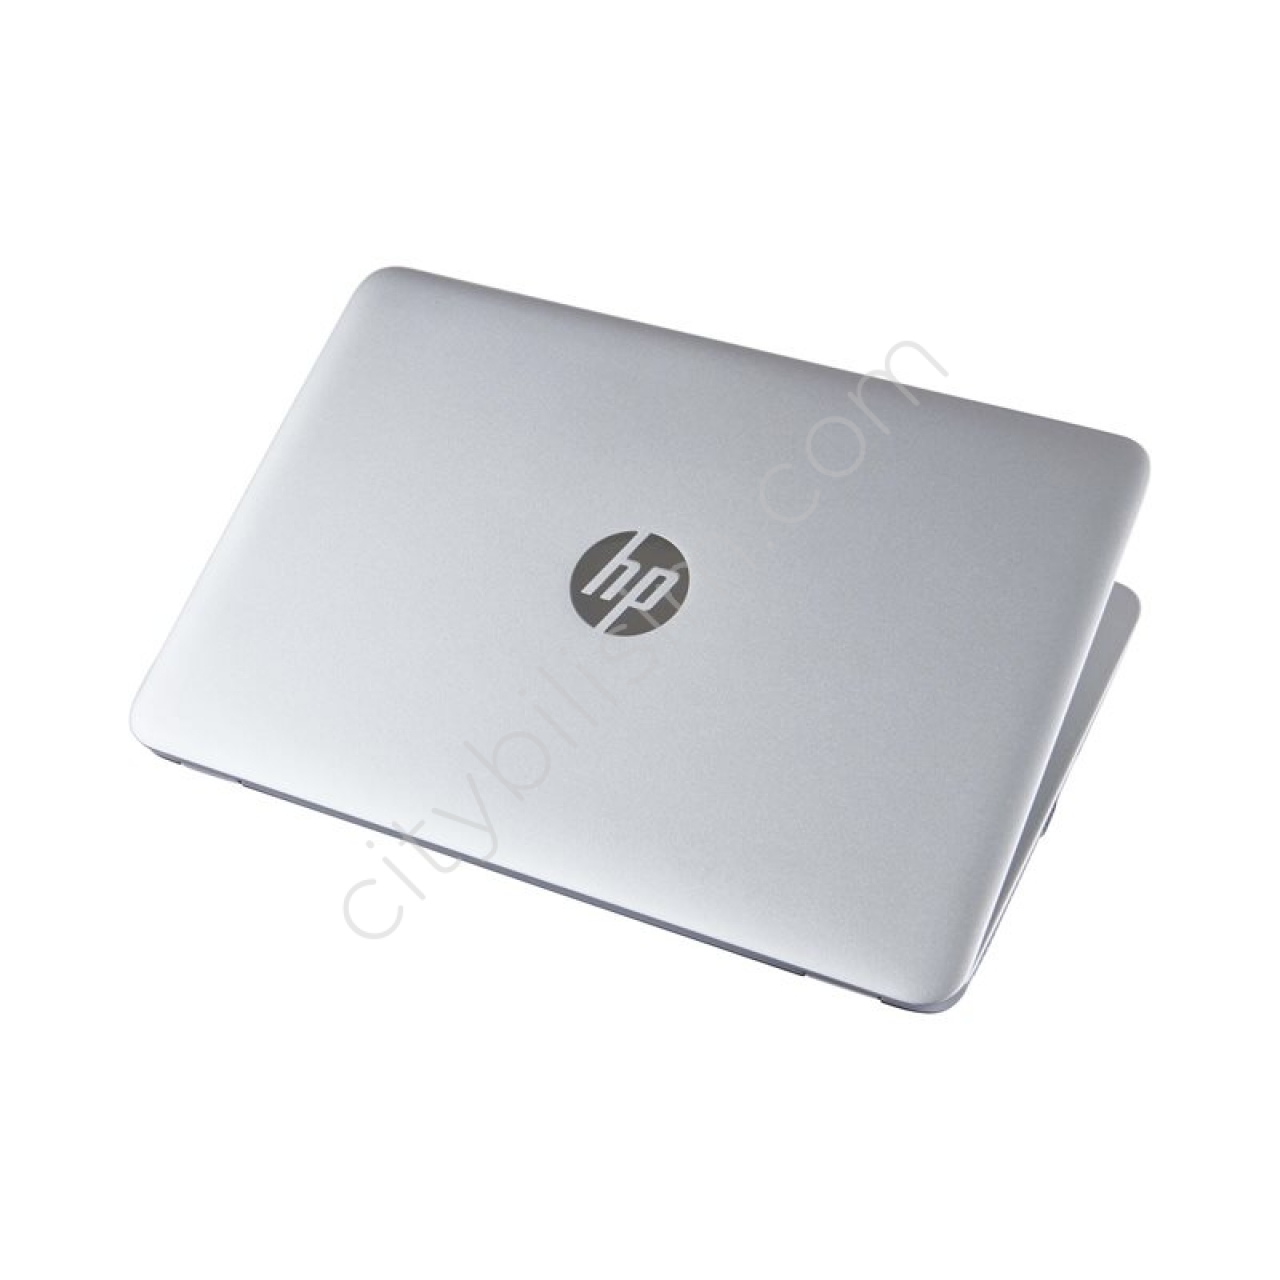 HP Elitebook 820 G4 İ5 7200U 8GB 256 GB M.2  SSD 12.5" Notebook